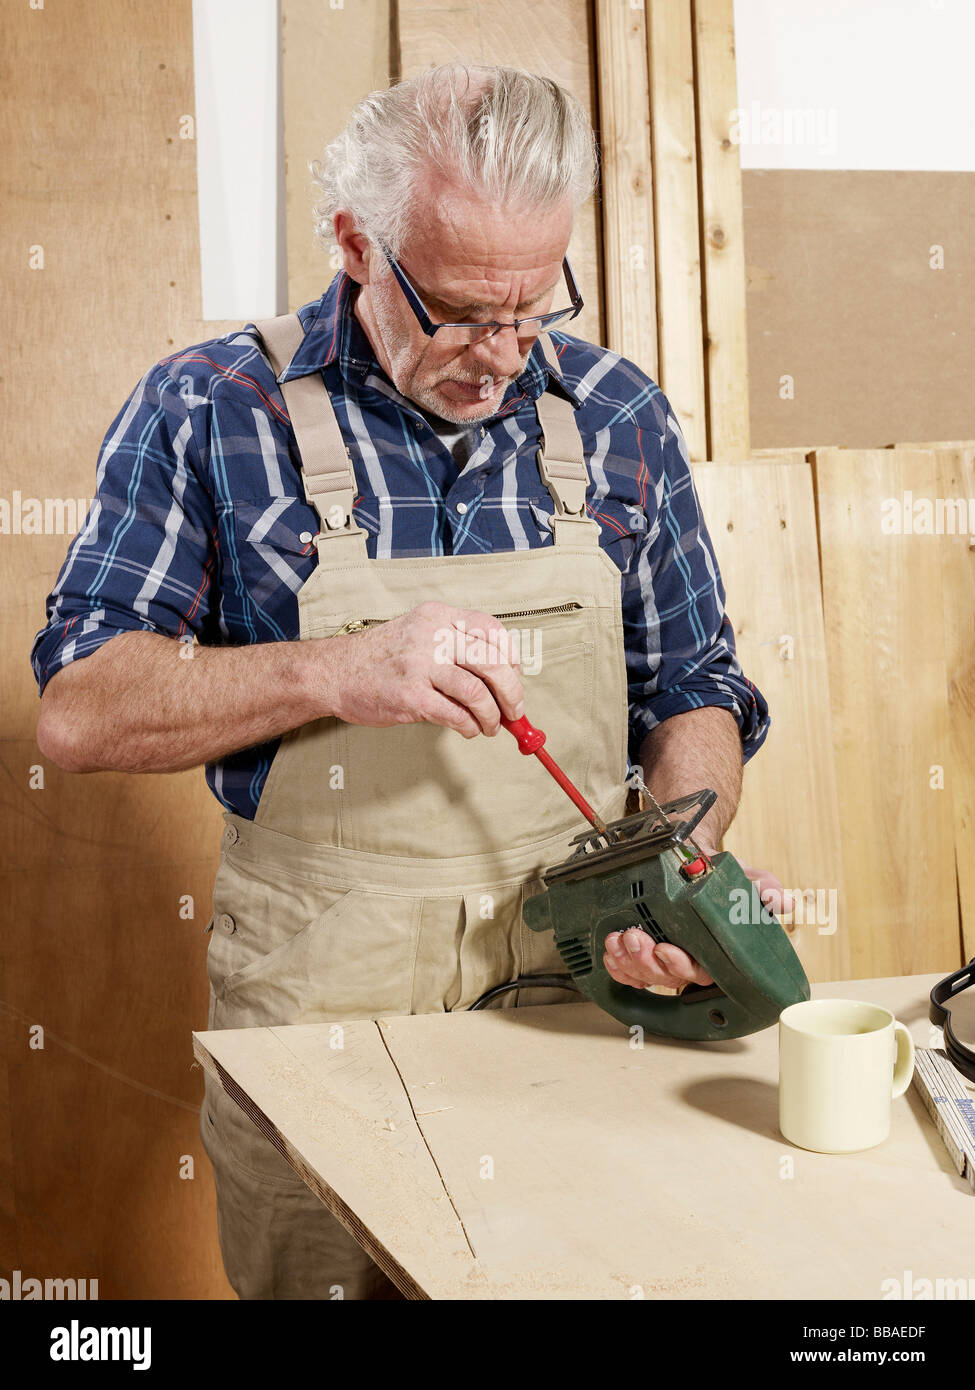 A man adjusting a power jigsaw Stock Photo